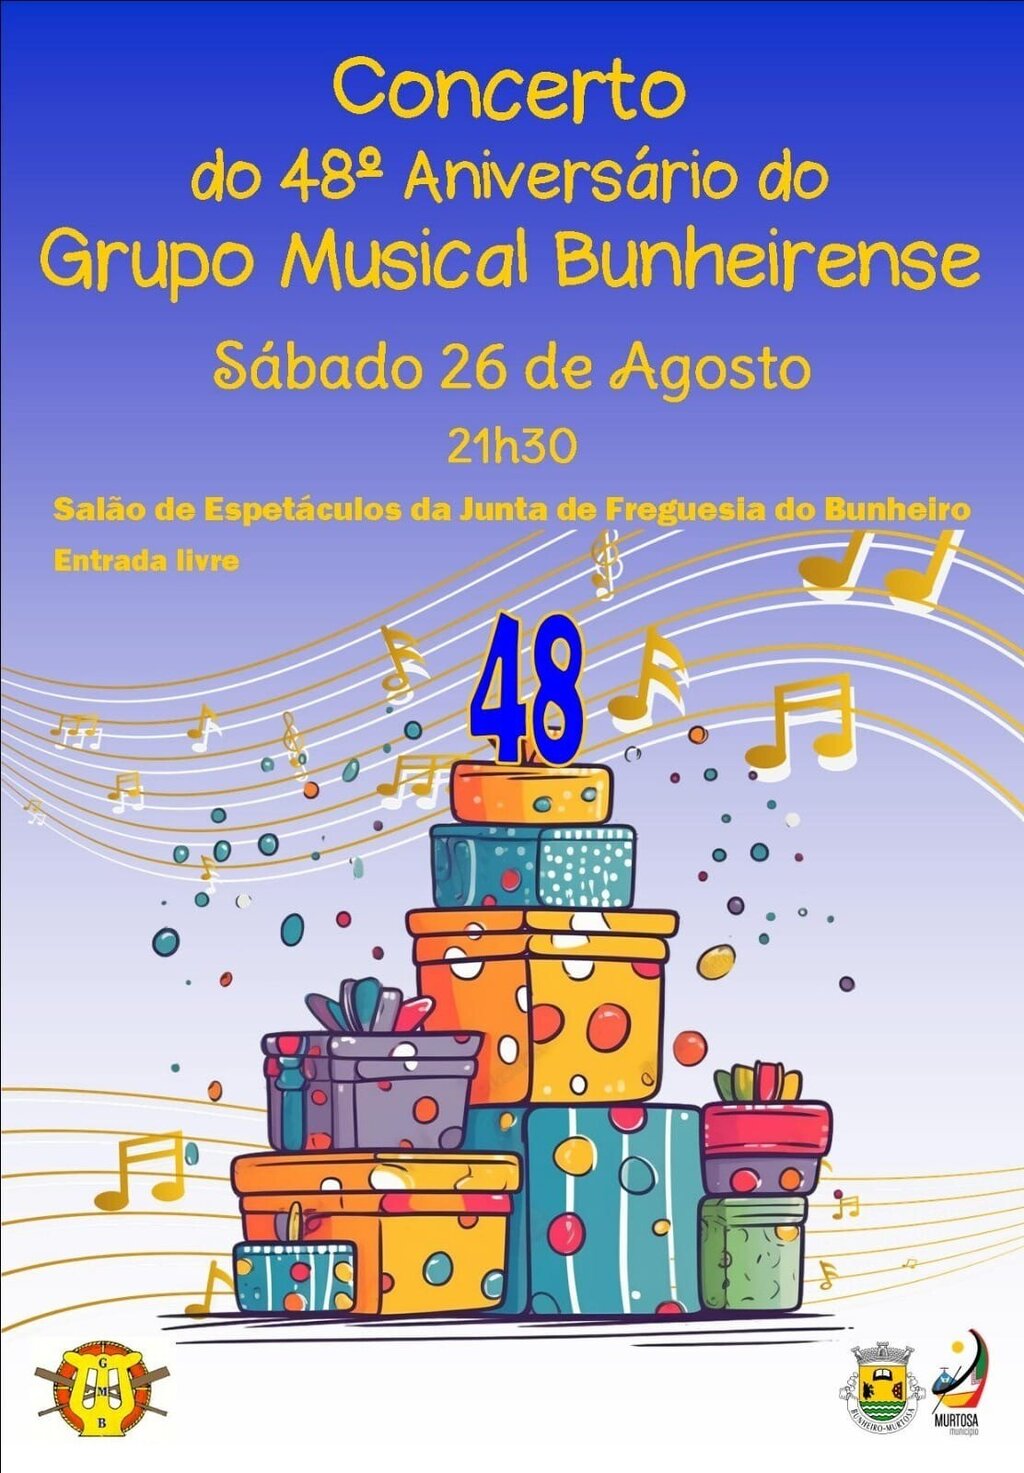 Concerto do 48º aniversário do Grupo Musical Bunheirense